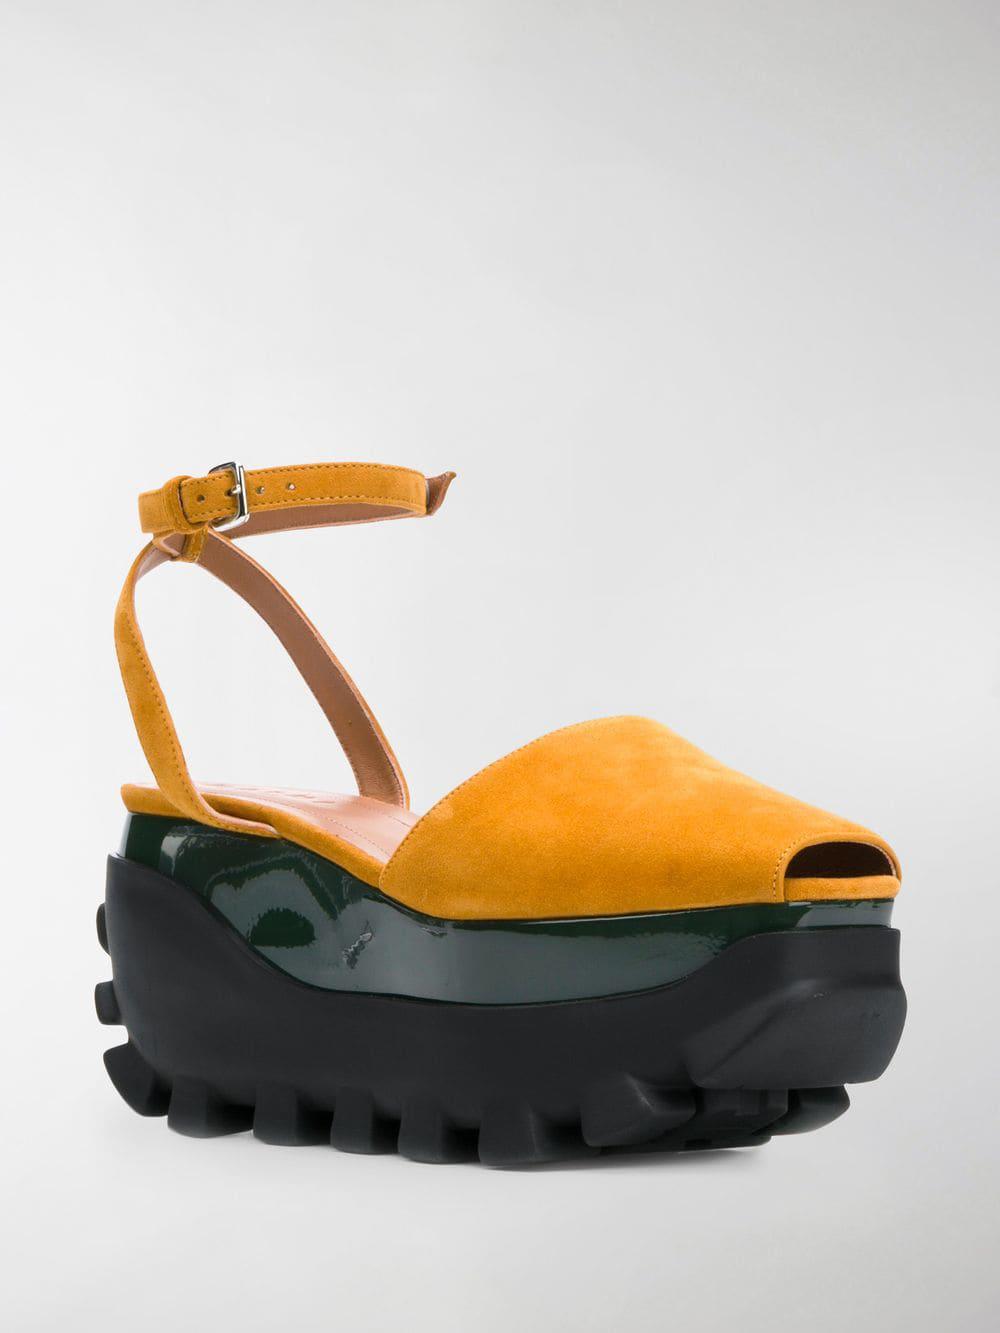 Marni Leather Platform Sandals in 